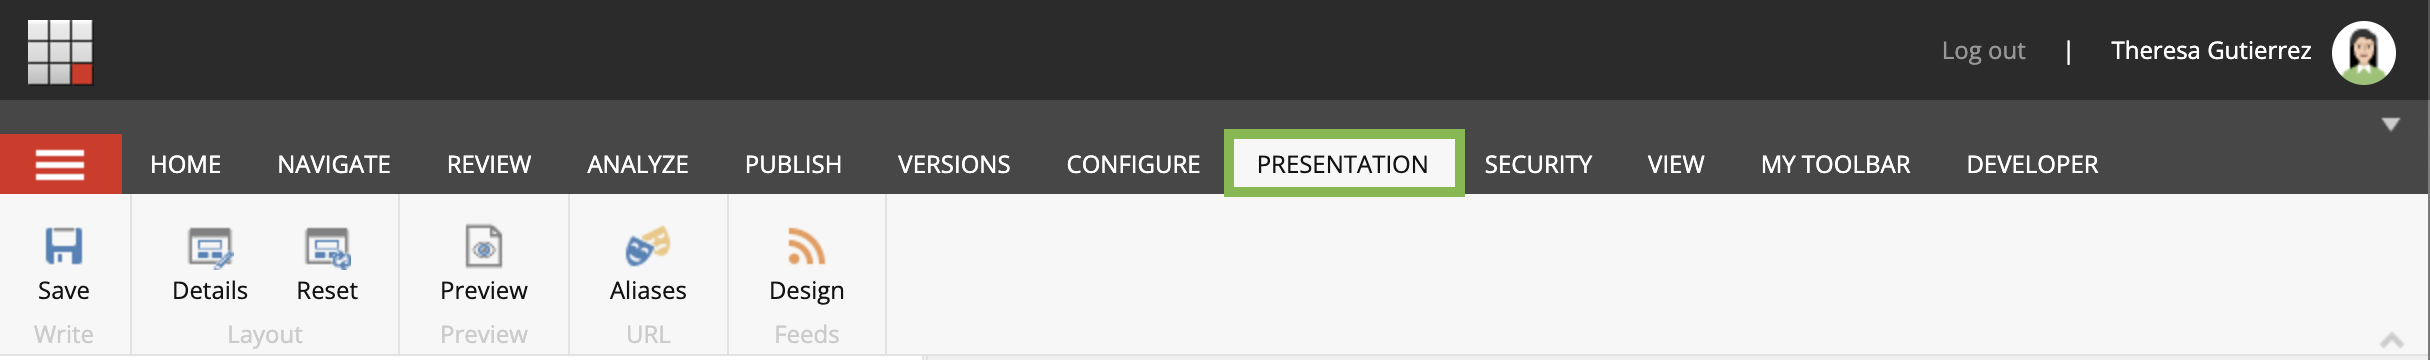 Sitecore Content Editor Presentation tab